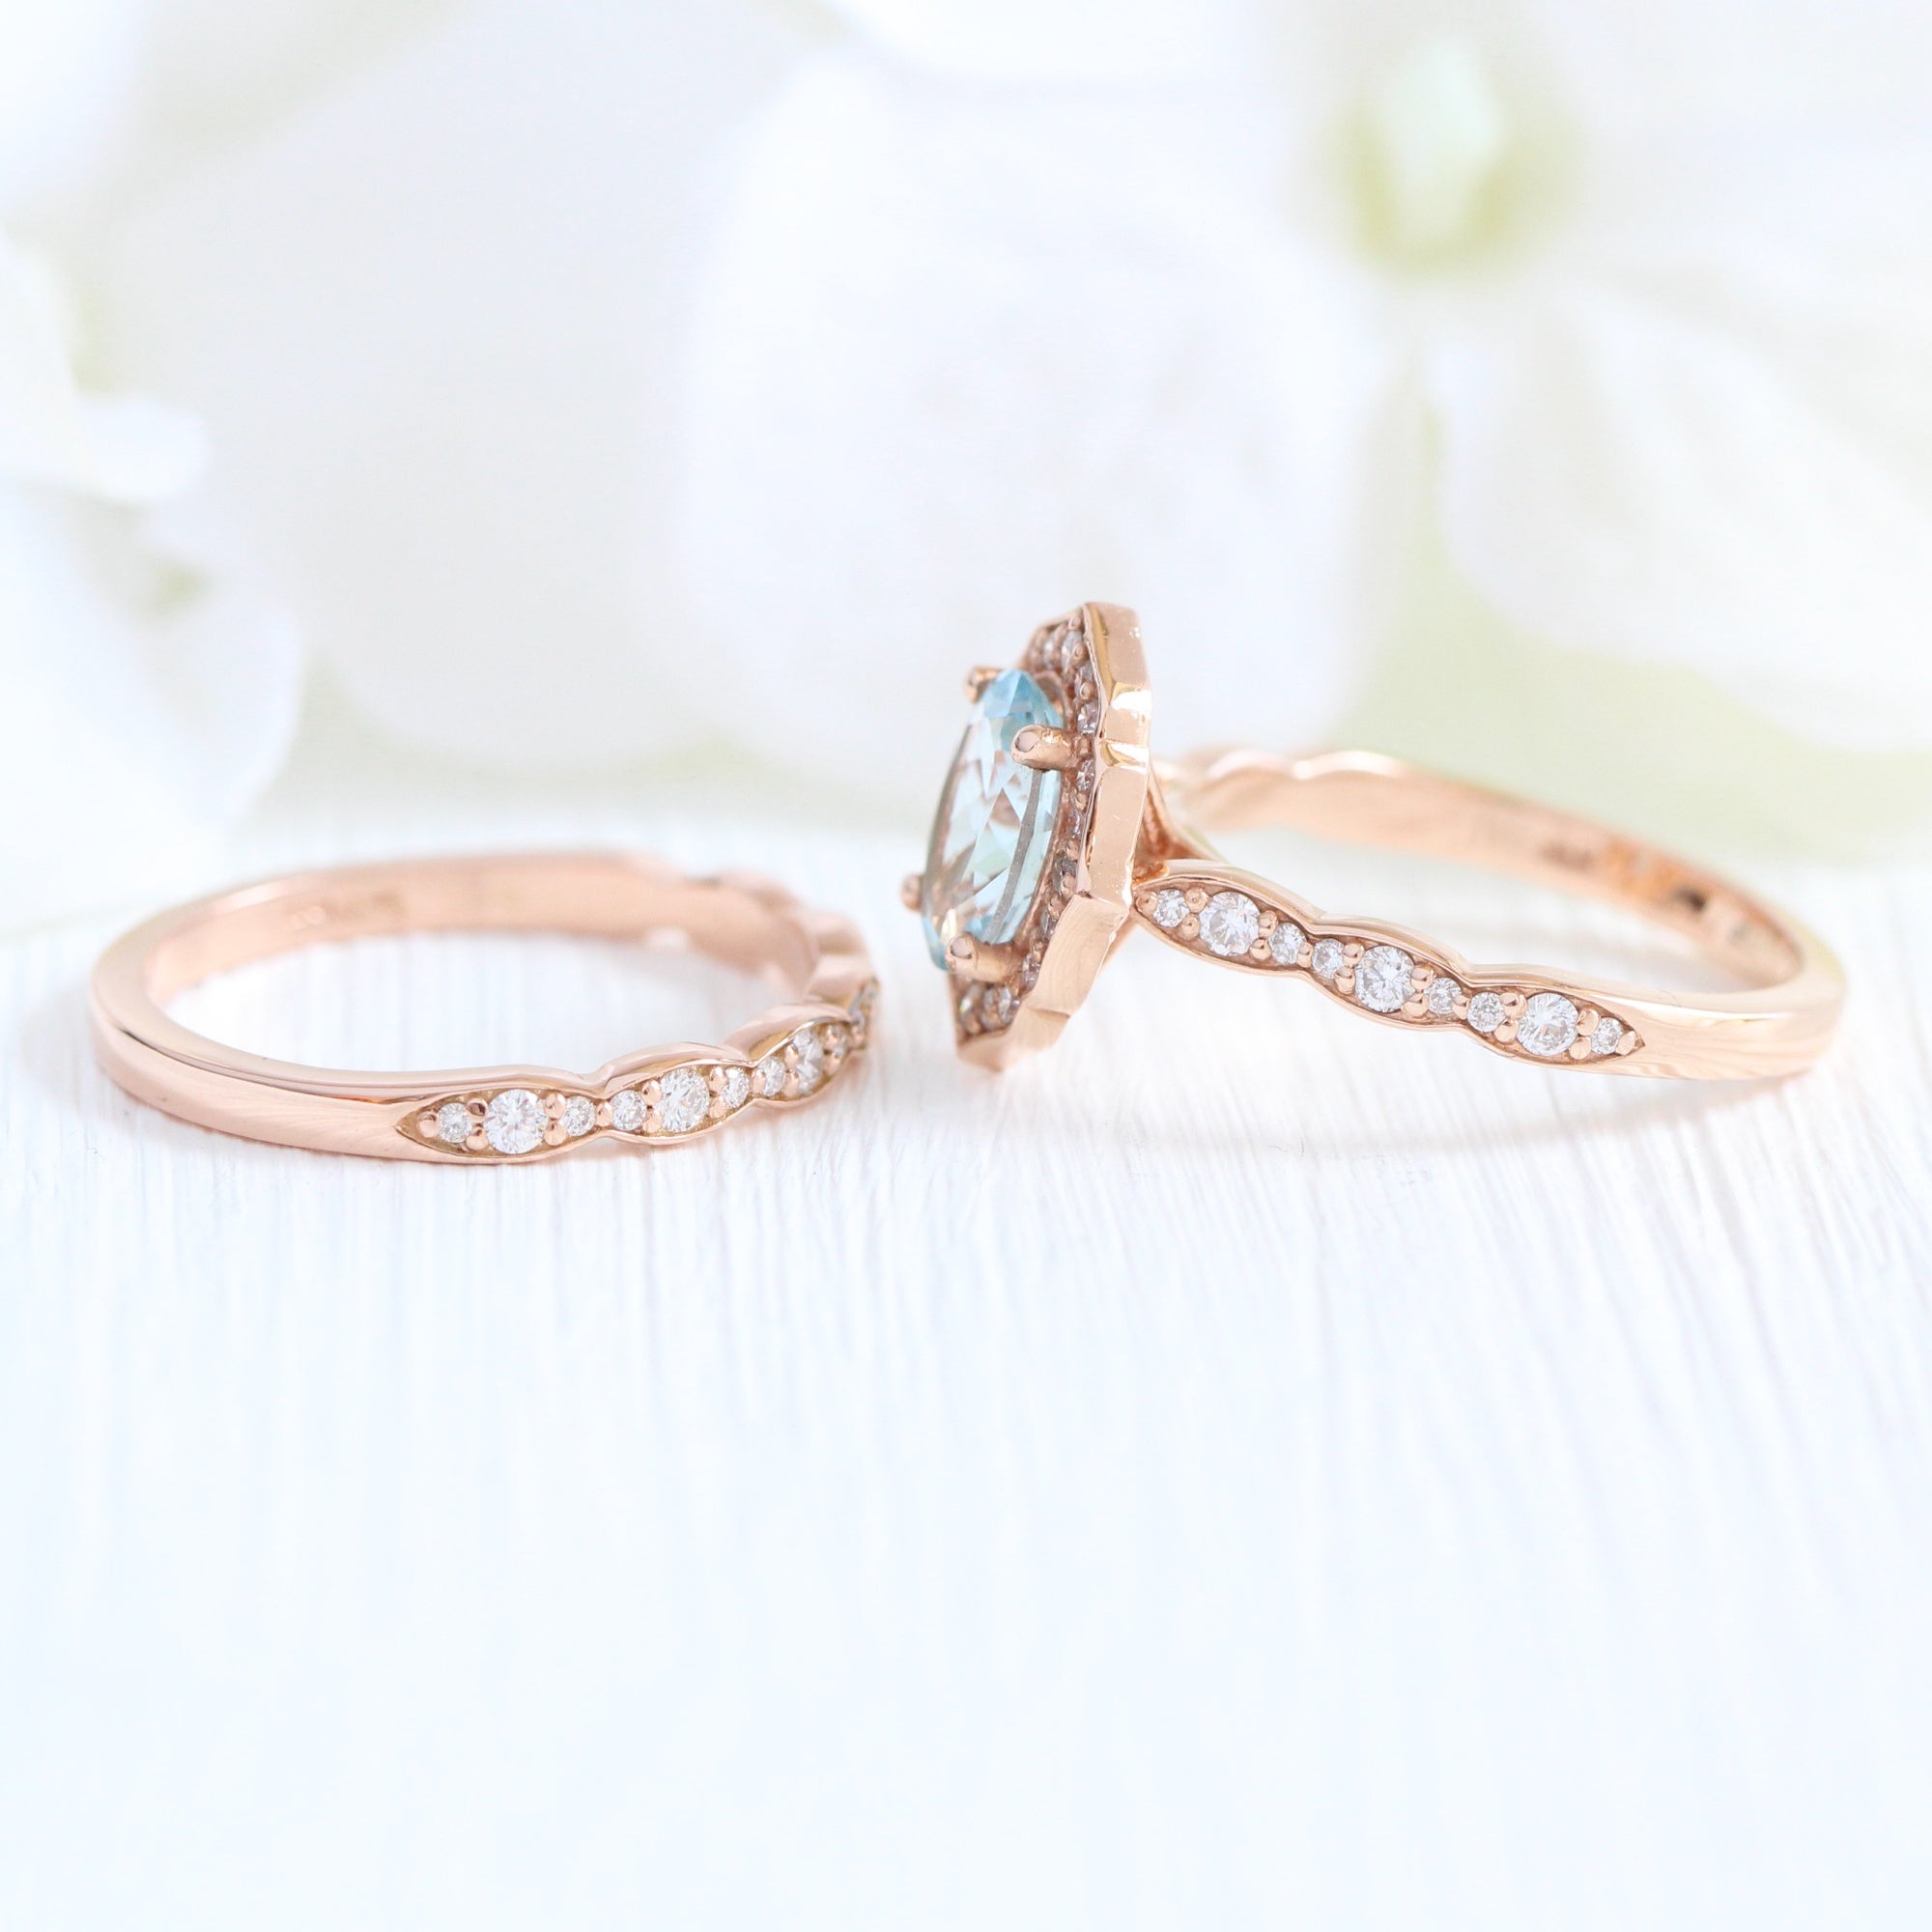 oval aquamarine ring stack rose gold vintage halo diamond ring la more design jewelry